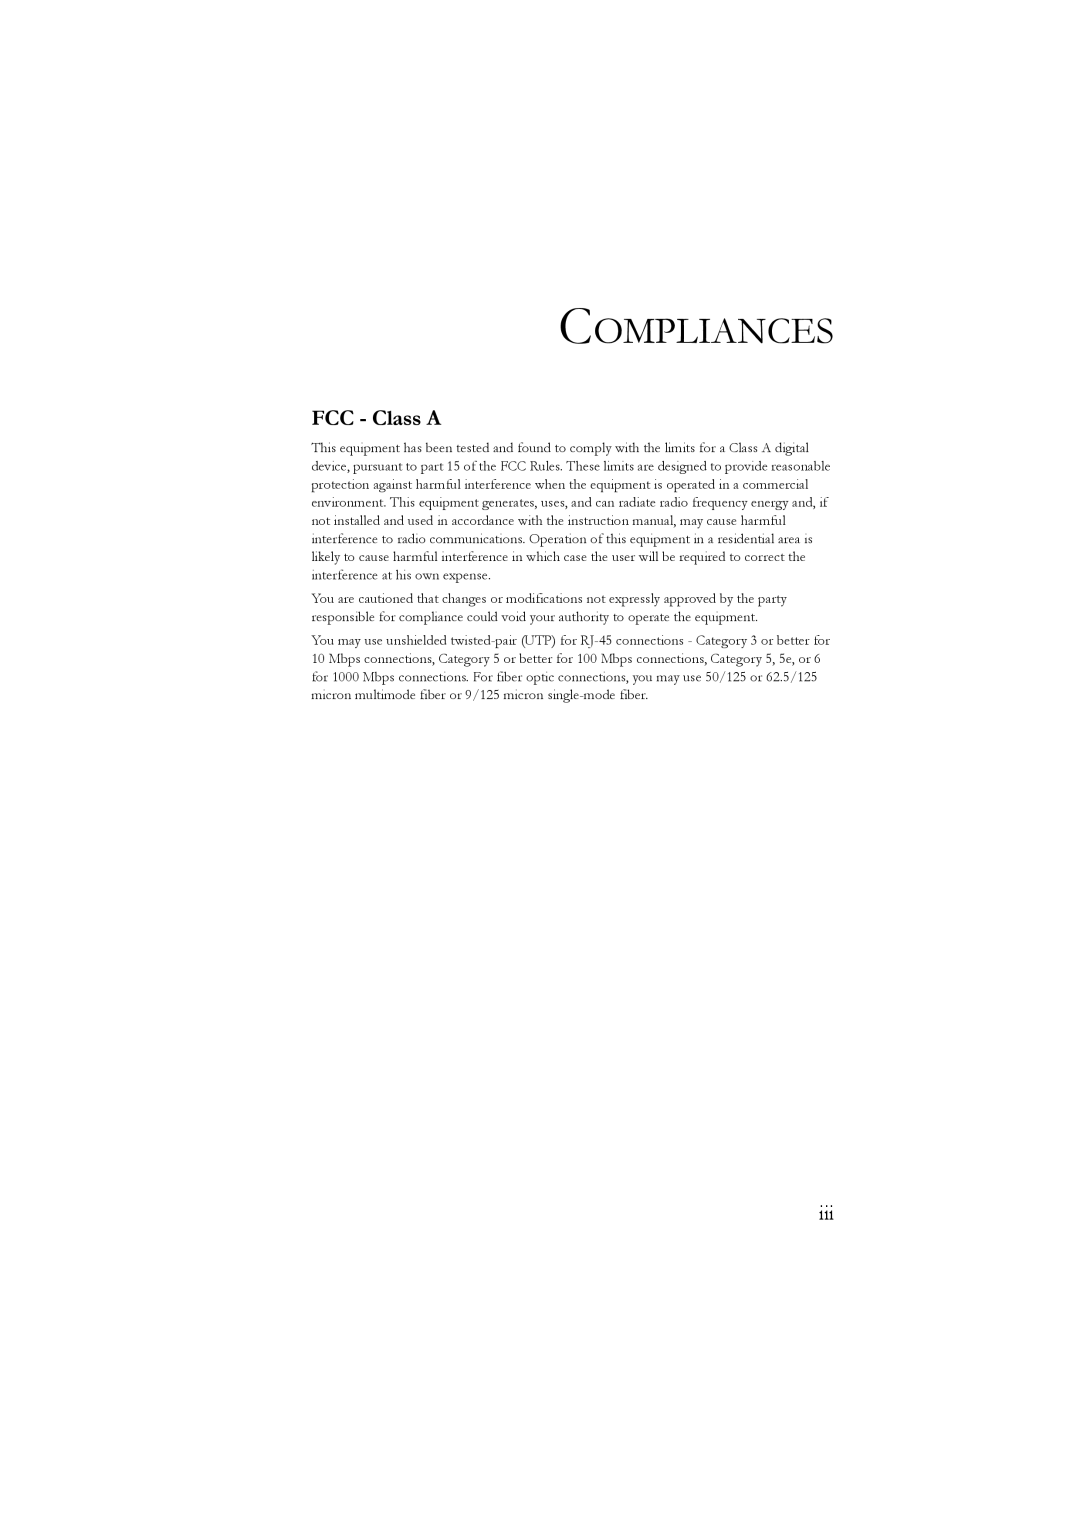 LevelOne GSW-2476 user manual Compliances, FCC - Class A 